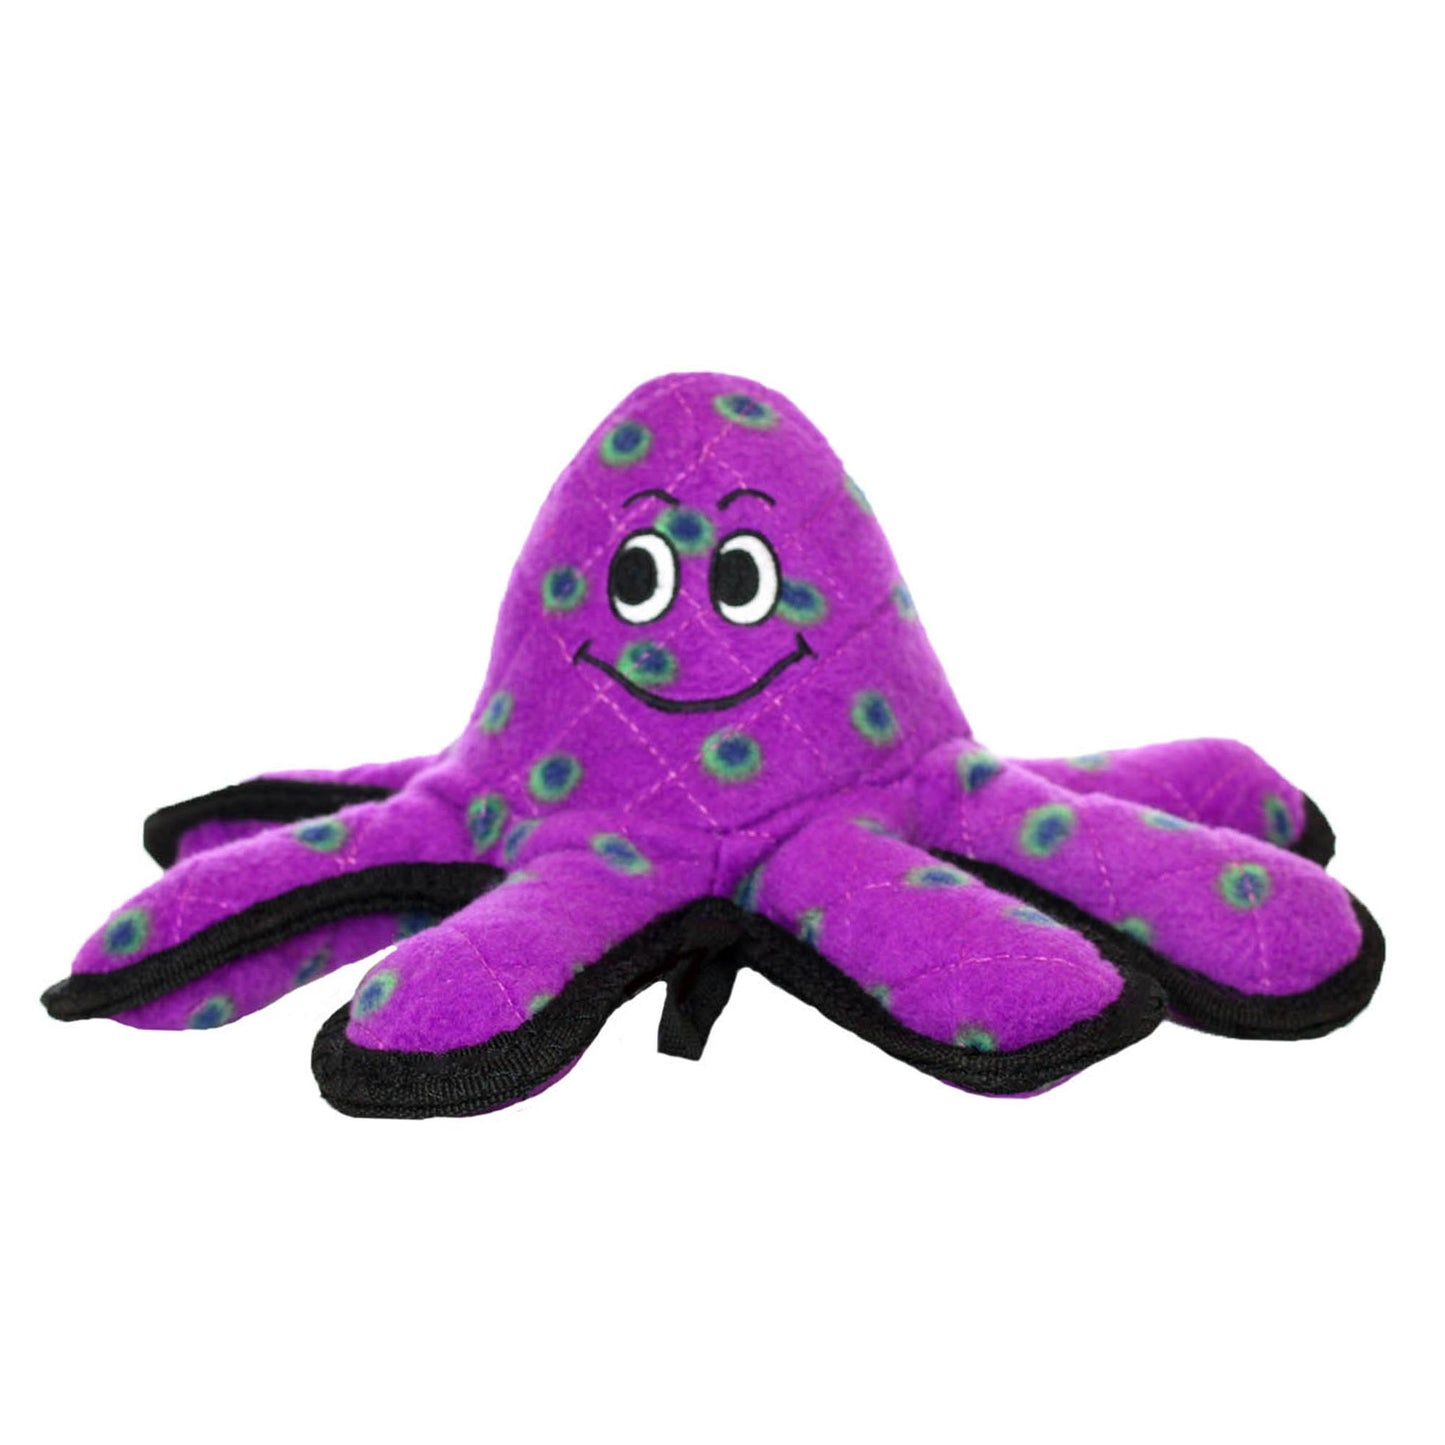 Tuffy Ocean Creatures - Octopus Dog Toy